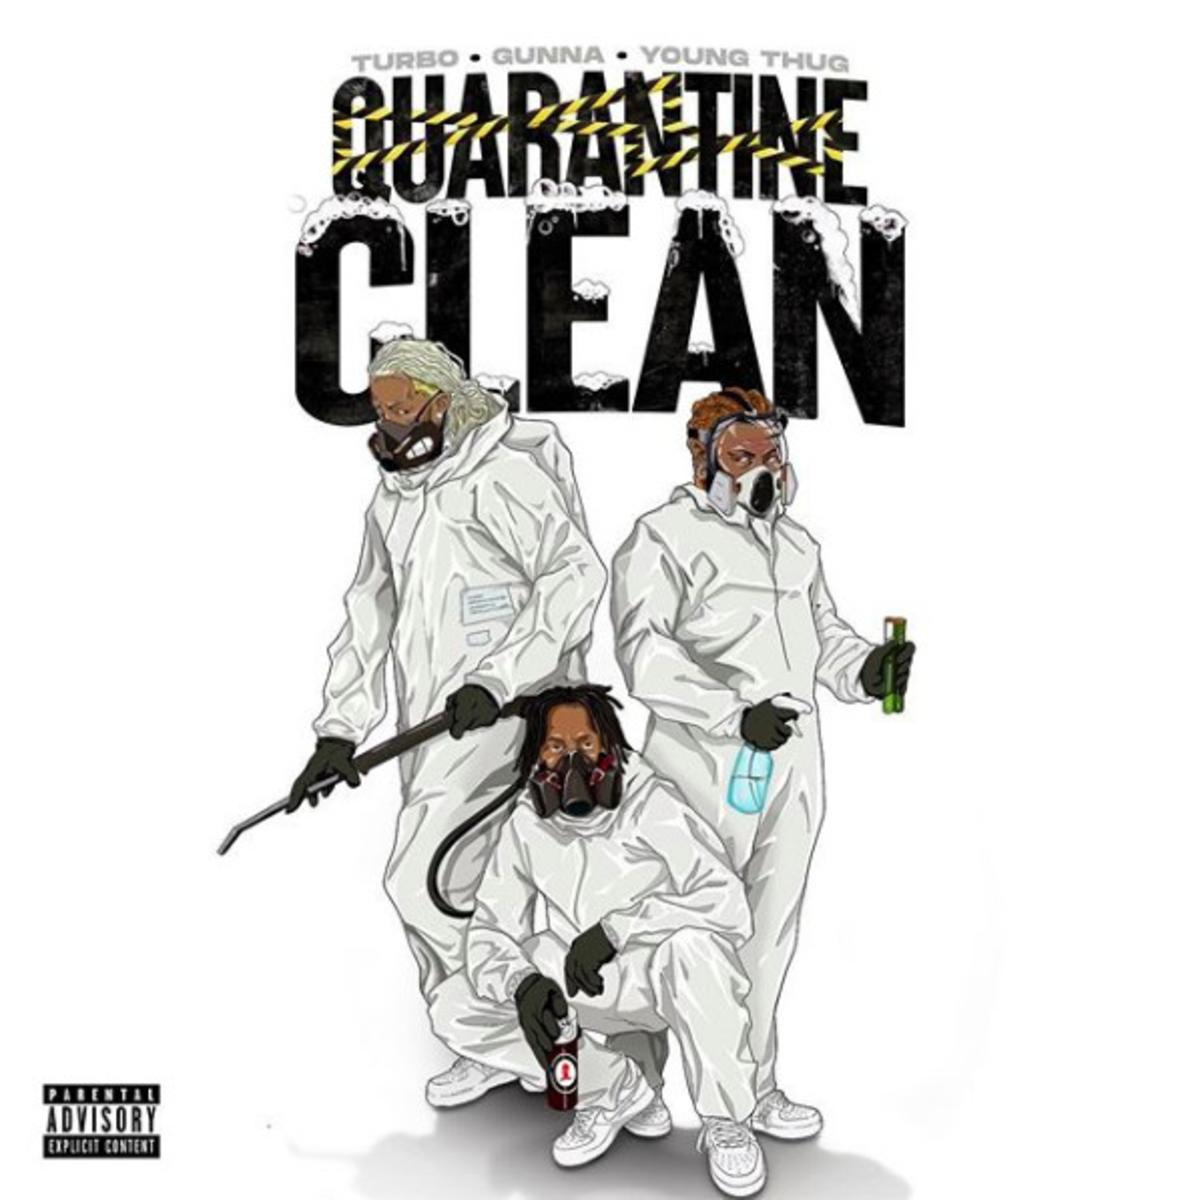 Young Thug, Gunna, & Turbo "Quarantine Clean"